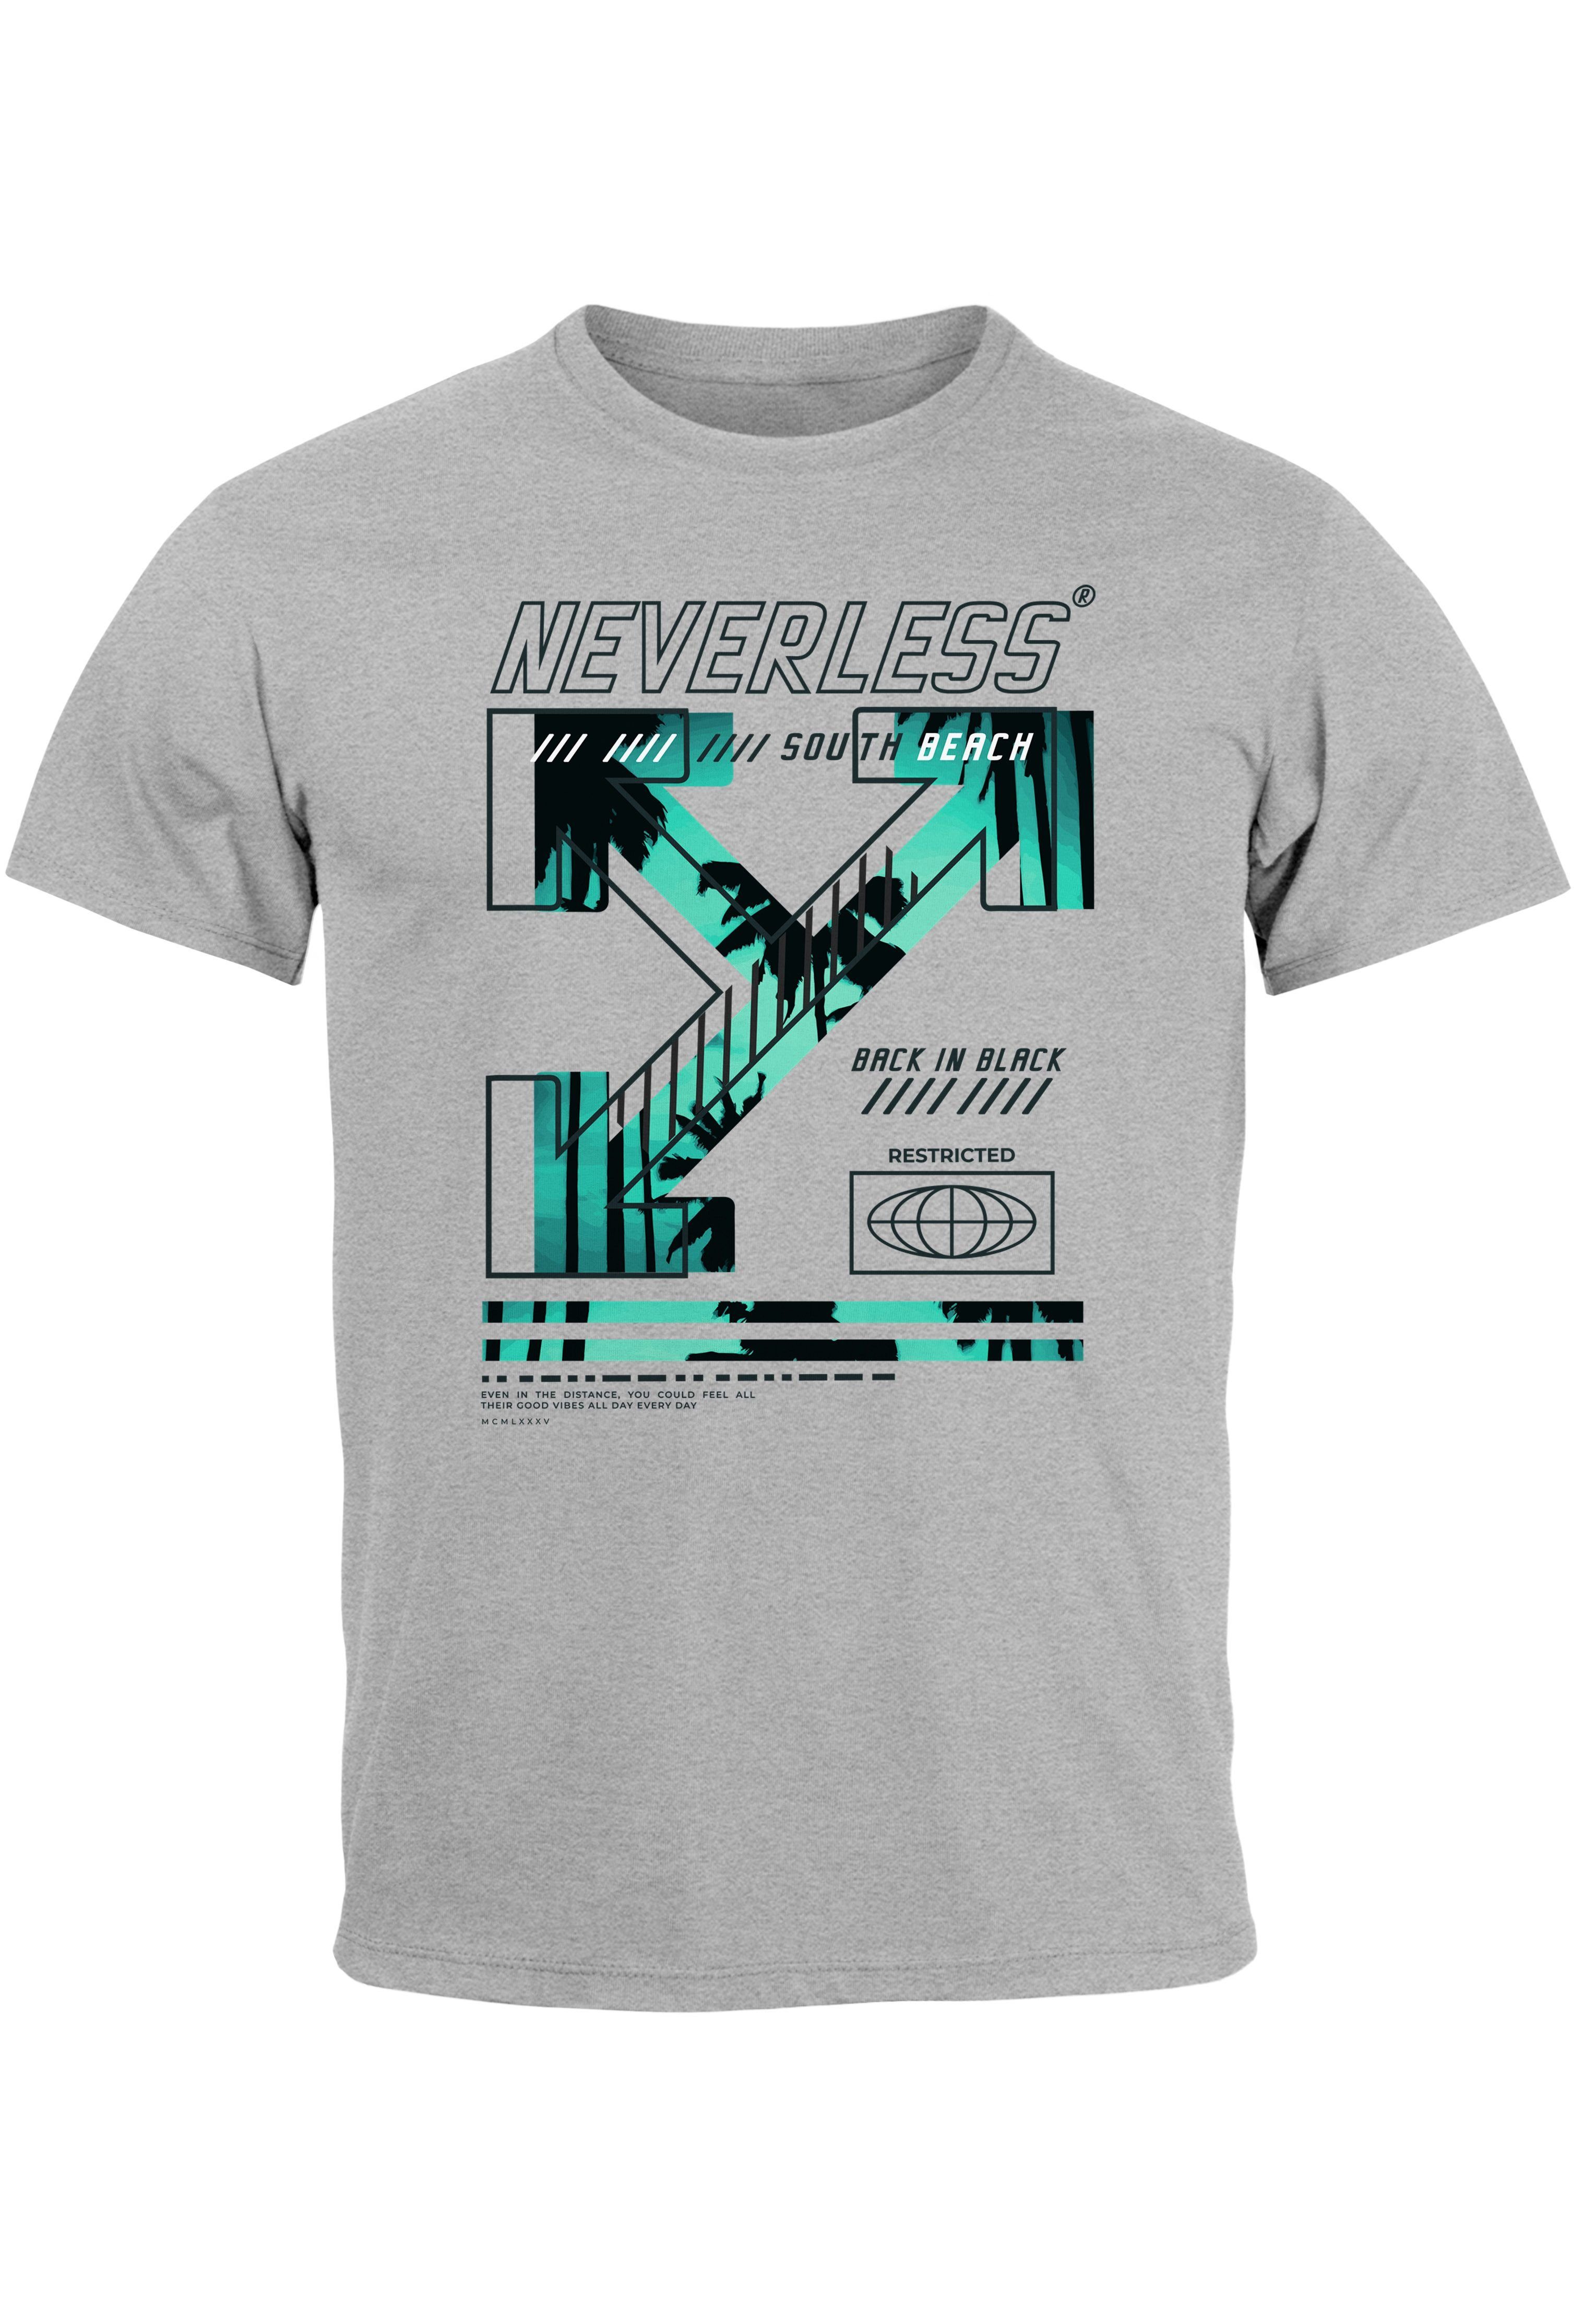 Neverless Print-Shirt Herren T-Shirt Text Print Aufdruck South Beach Techwear Fashion Street mit Print grau